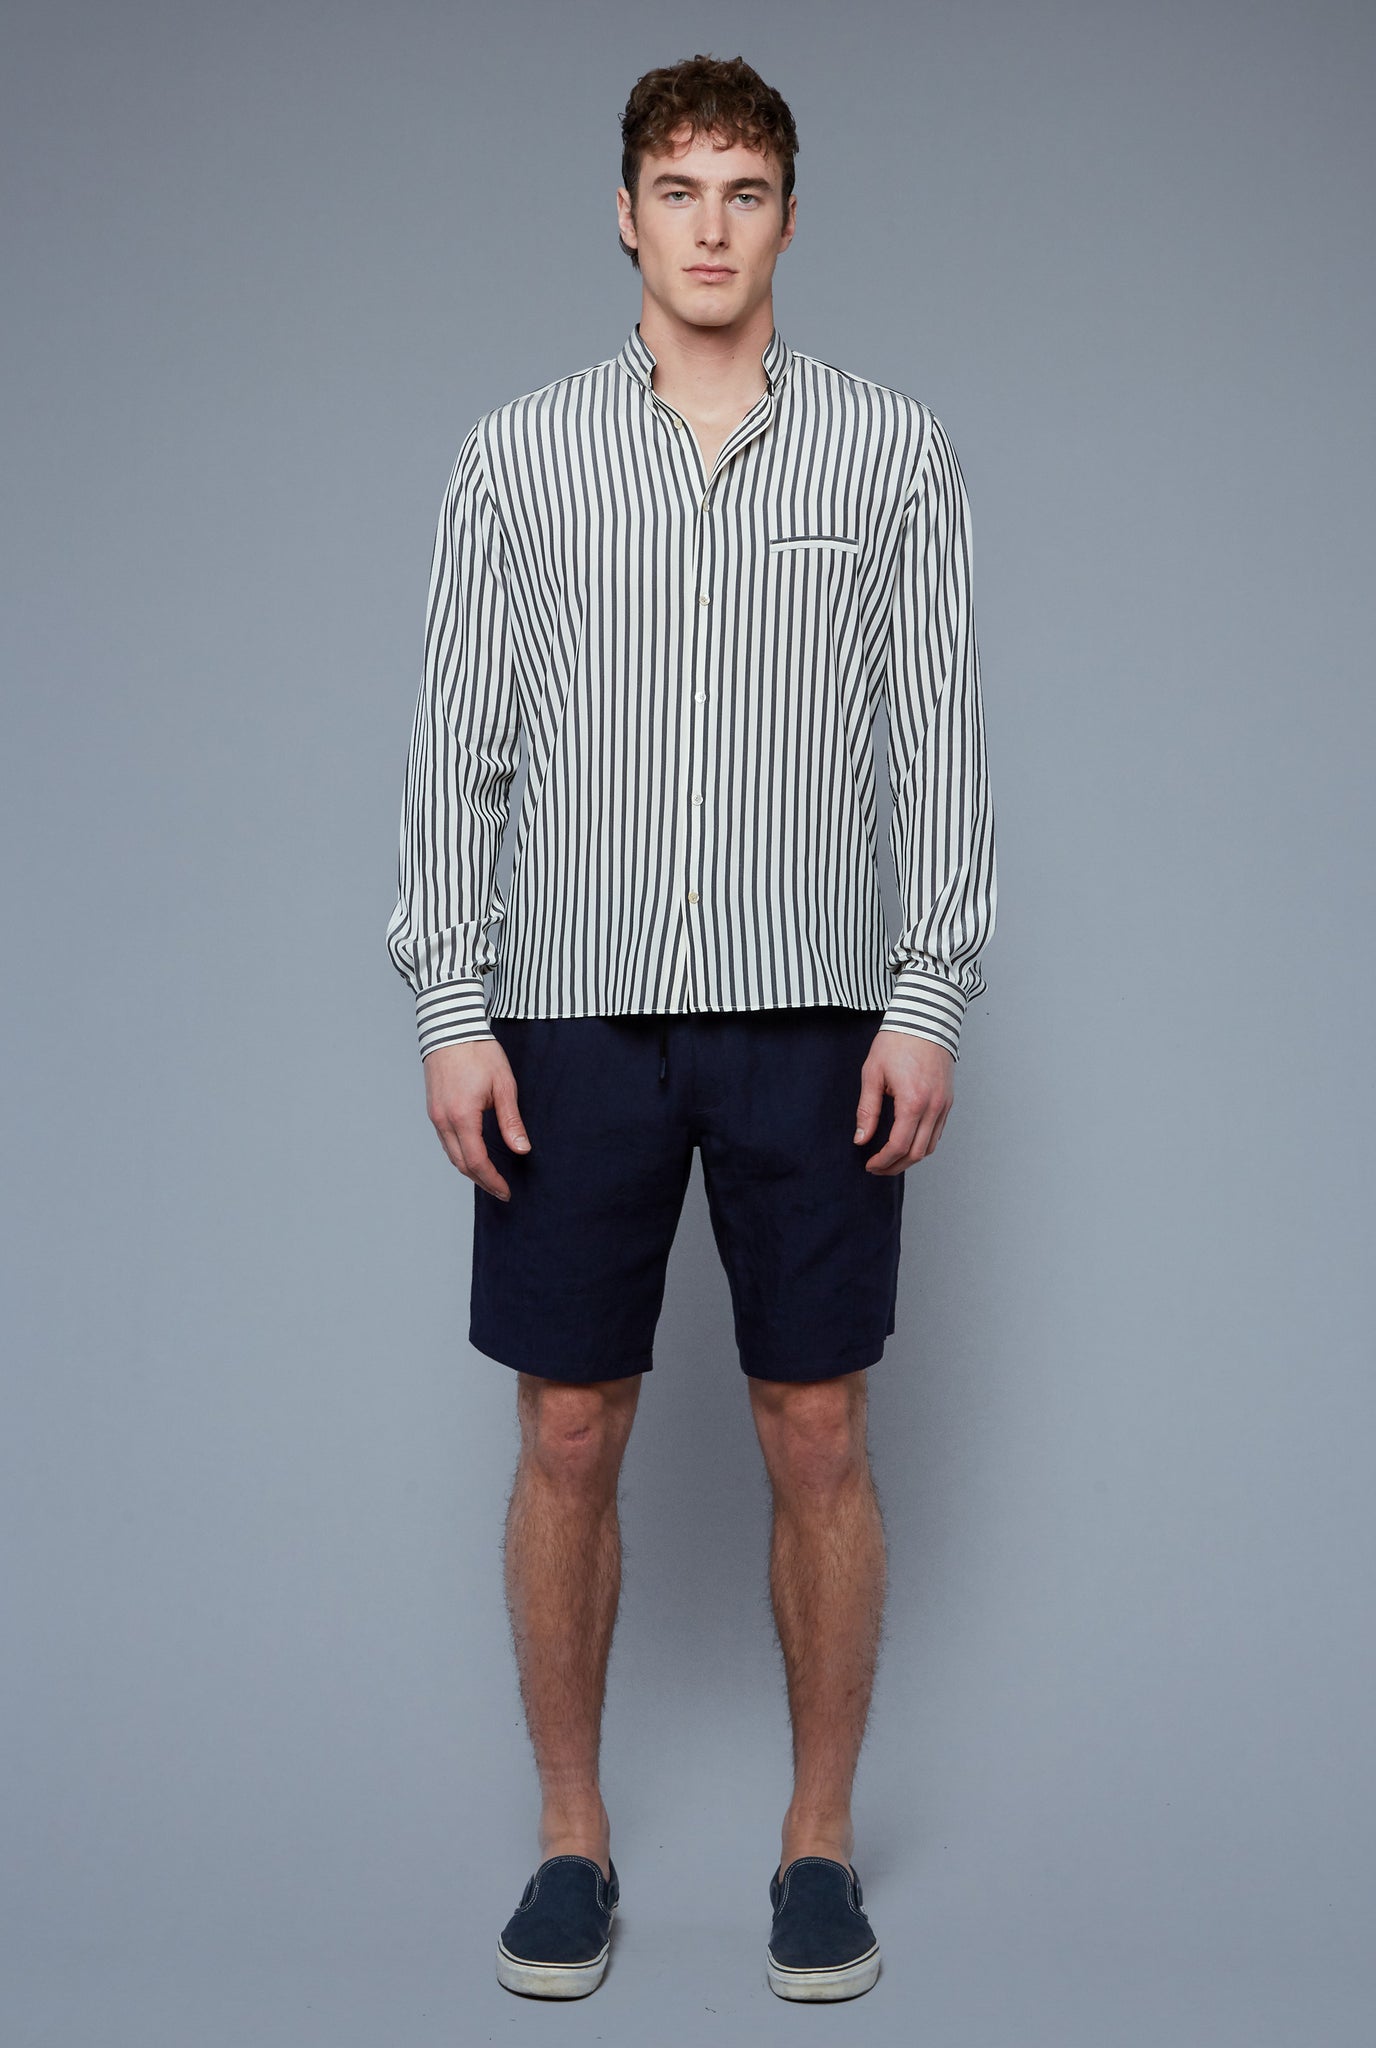 Front View: Model Hans Weiner wearing Silk Mercer Shirt